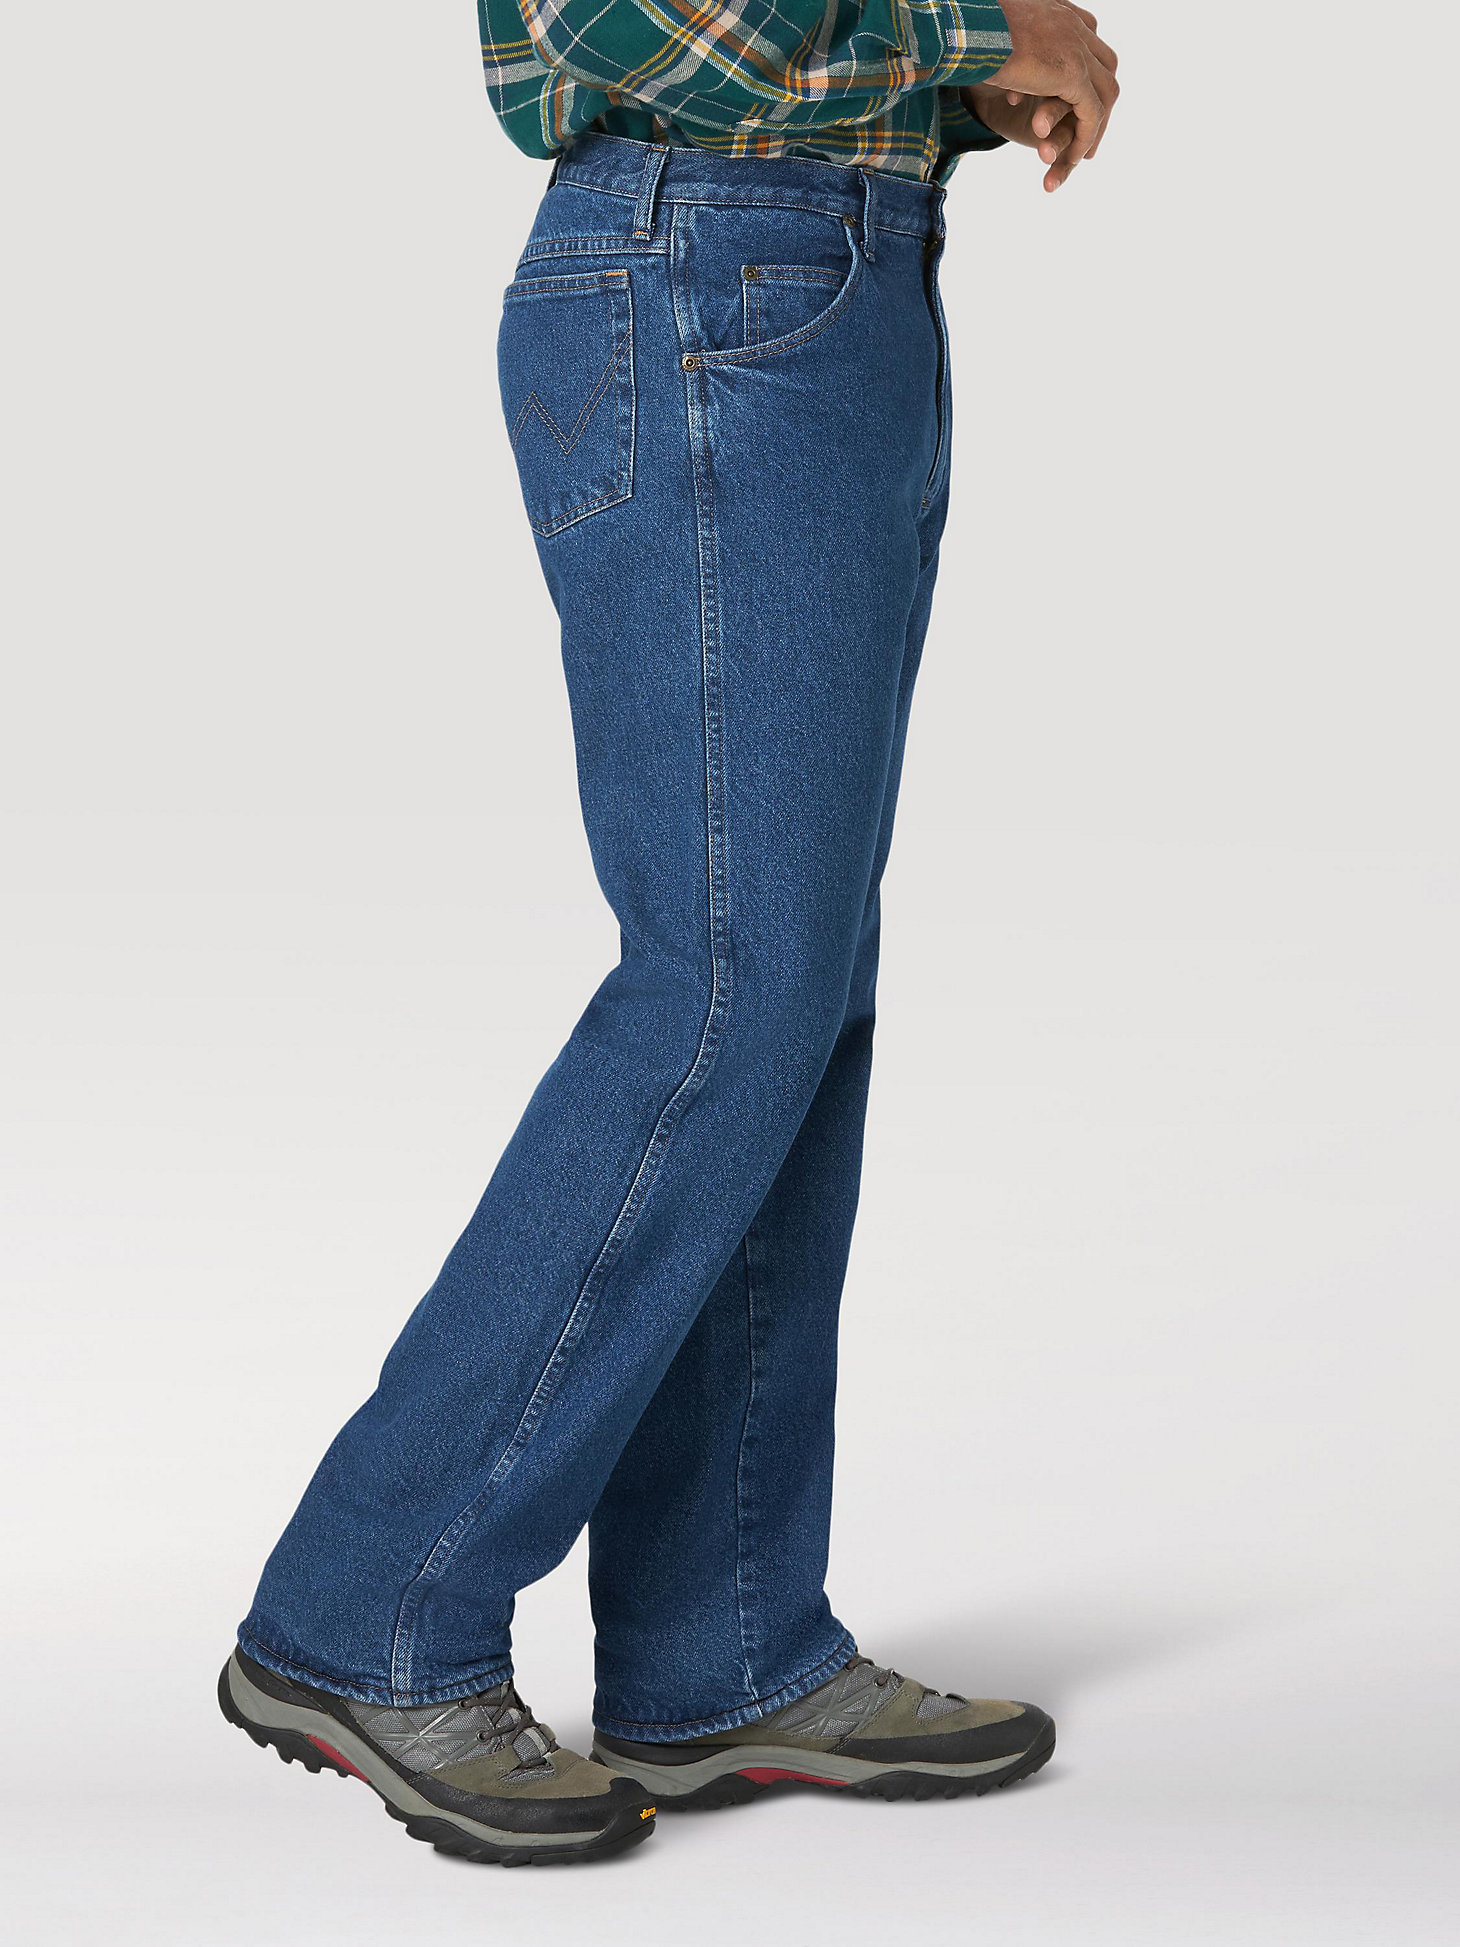 Wrangler Rugged Wear® Fleece Lined Relaxed Fit Jean in Stonewash alternative view 1